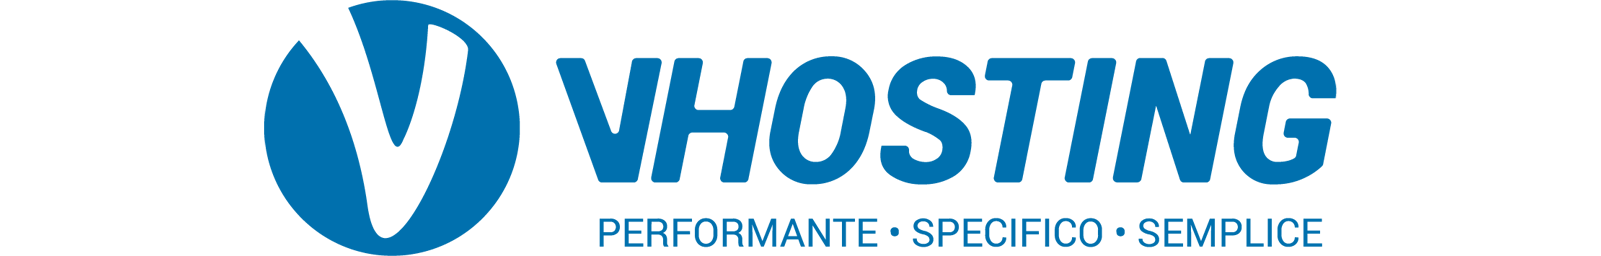 VHosting Logo